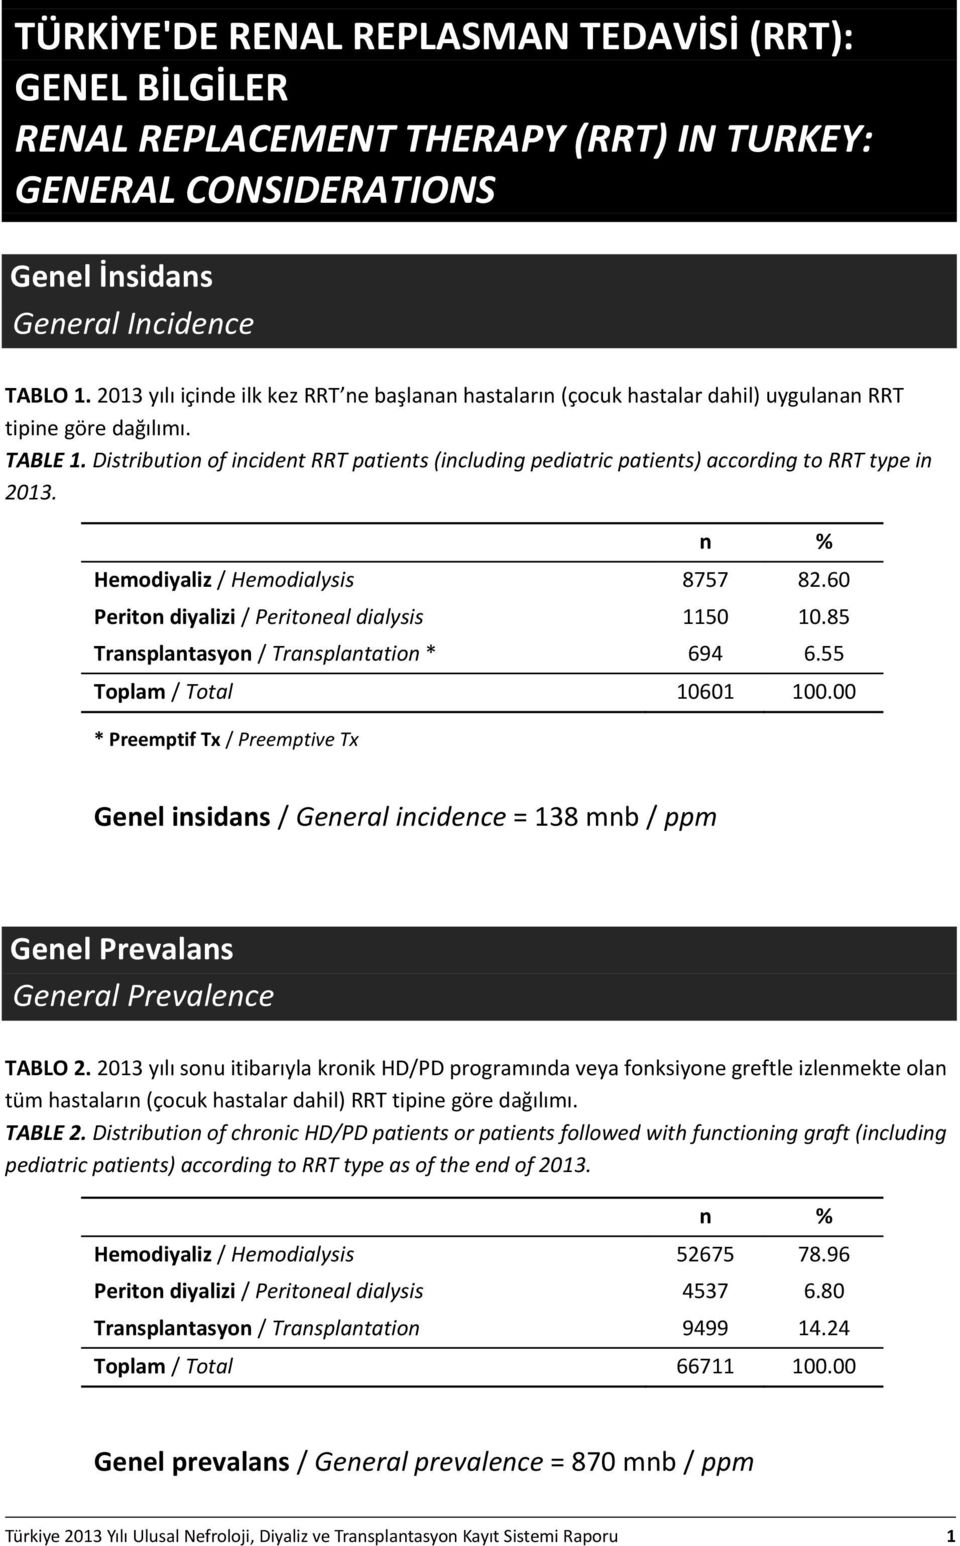 Distribution of incident RRT patients (including pediatric patients) according to RRT type in 2013. Hemodiyaliz / Hemodialysis 8757 82.60 Periton diyalizi / Peritoneal dialysis 1150 10.